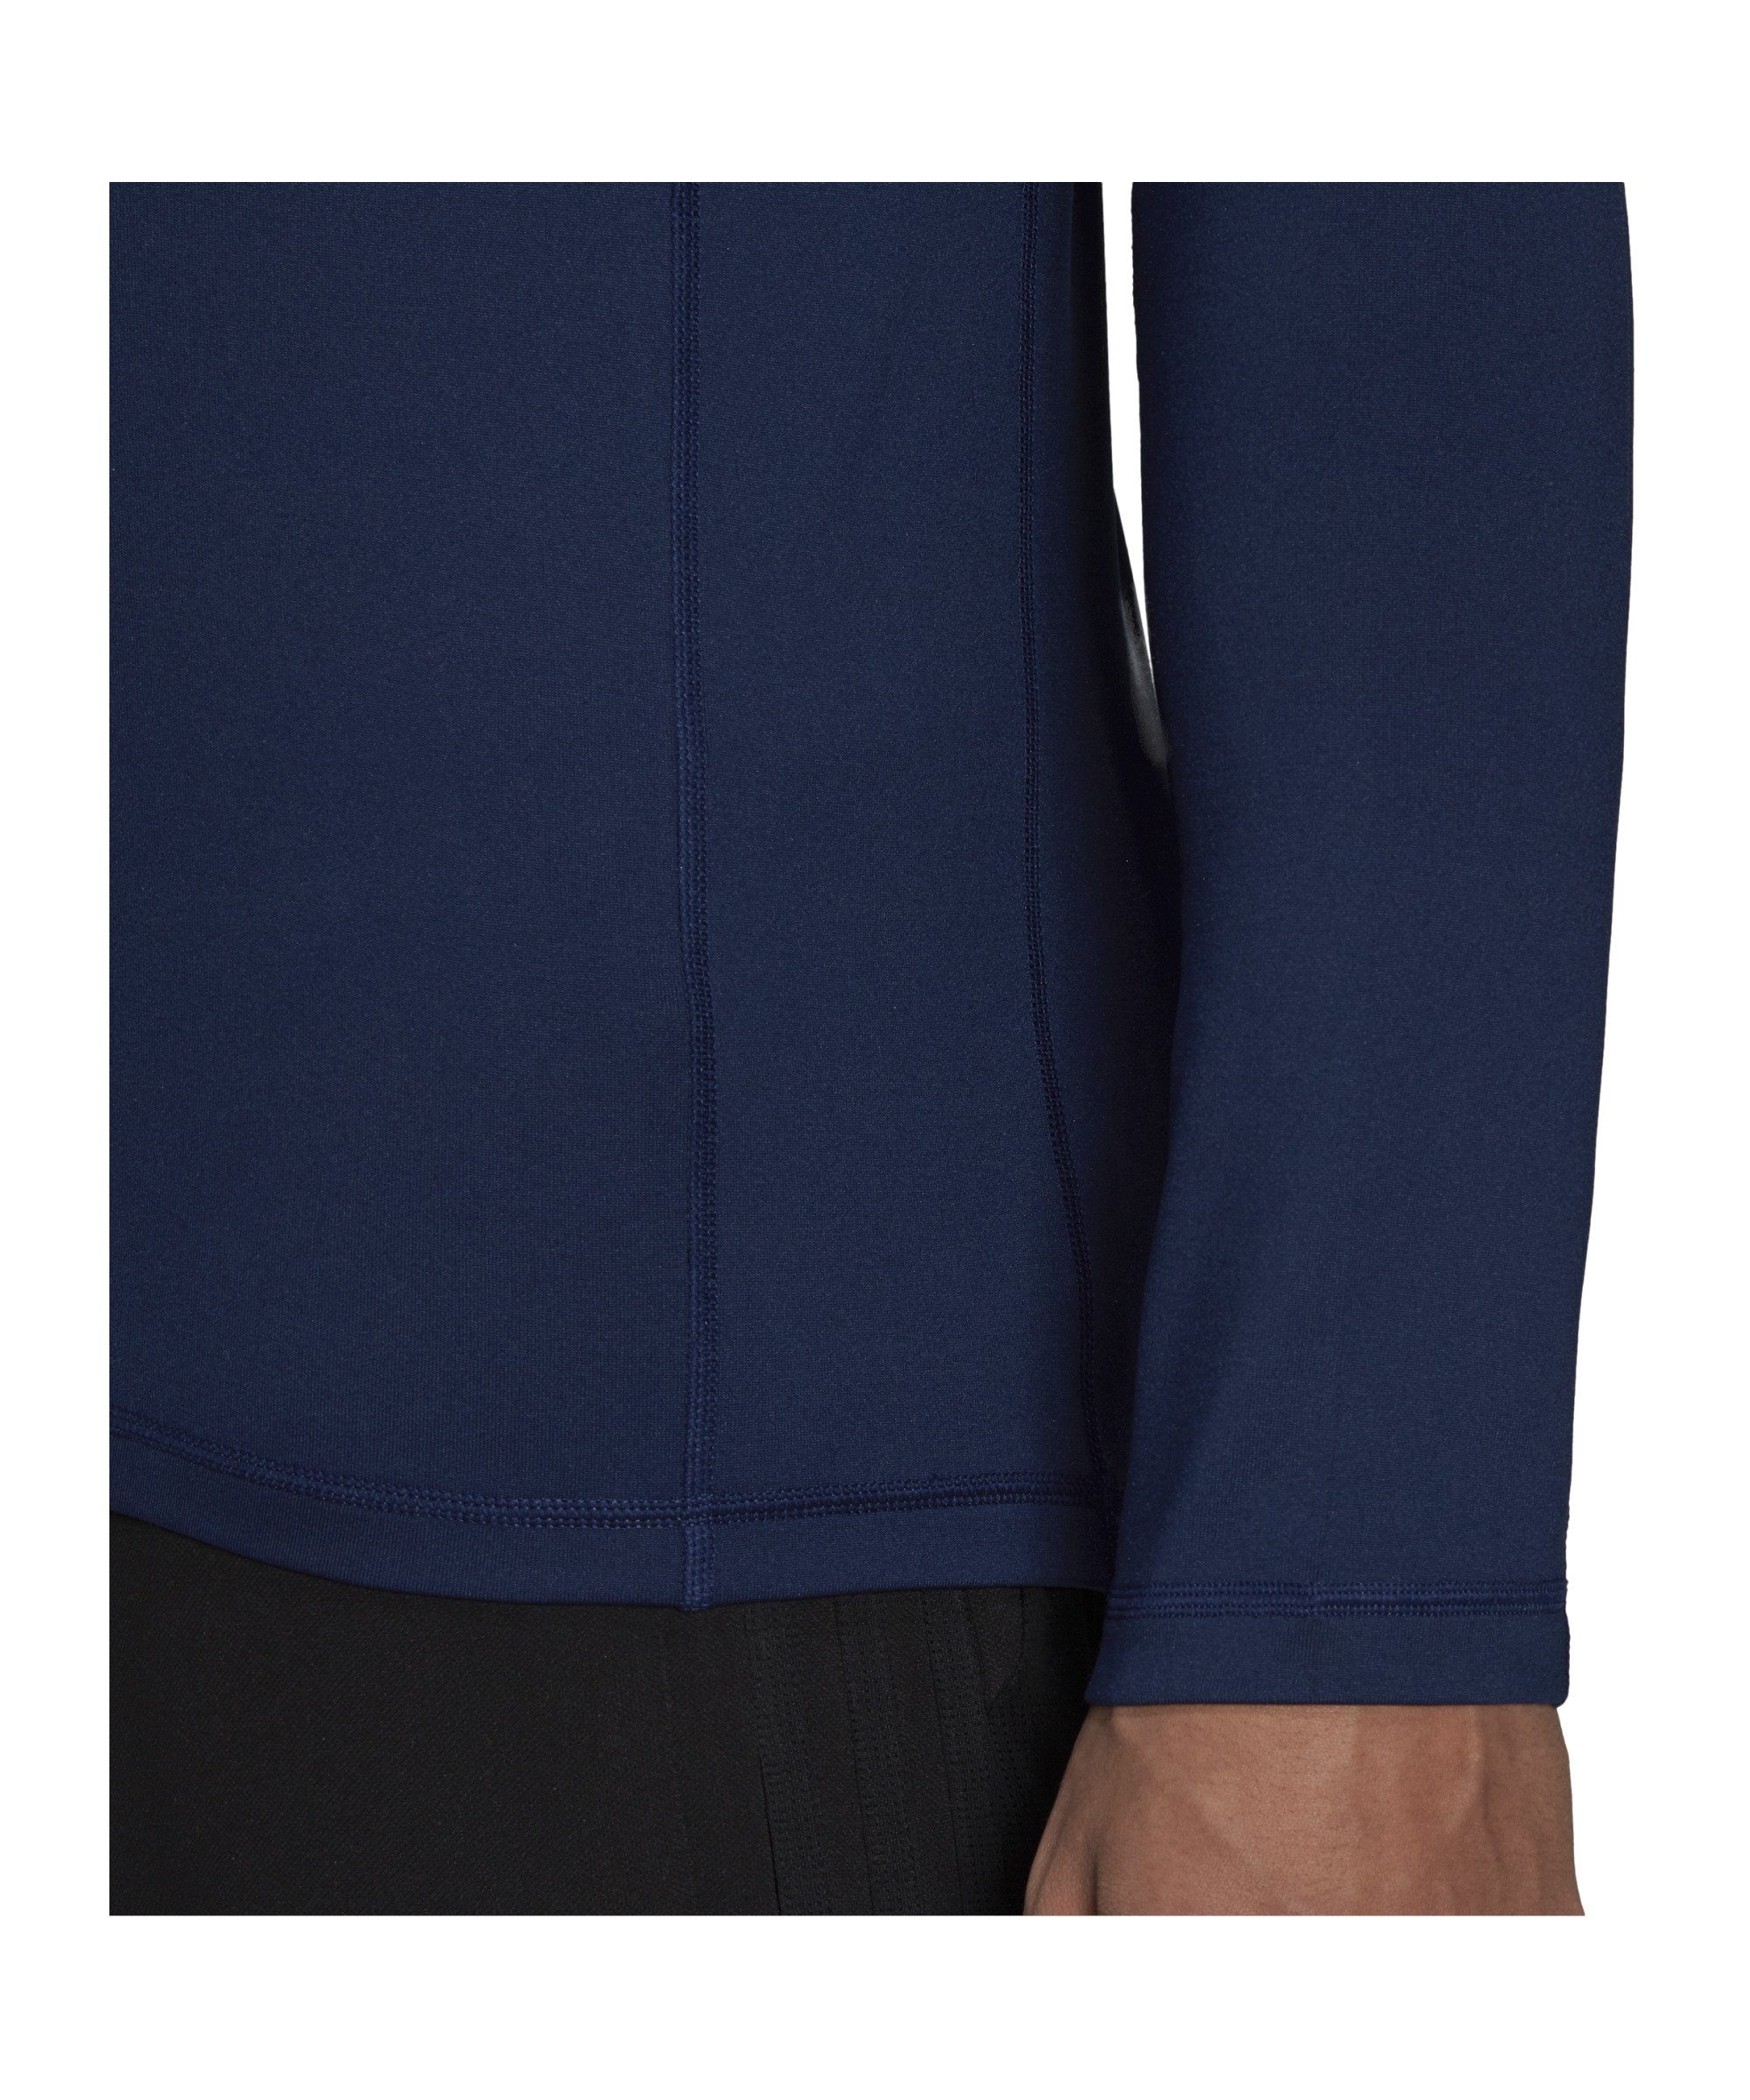 default Warm Dunkel Longsleeve adidas Performance Funktionsshirt TechFit blau